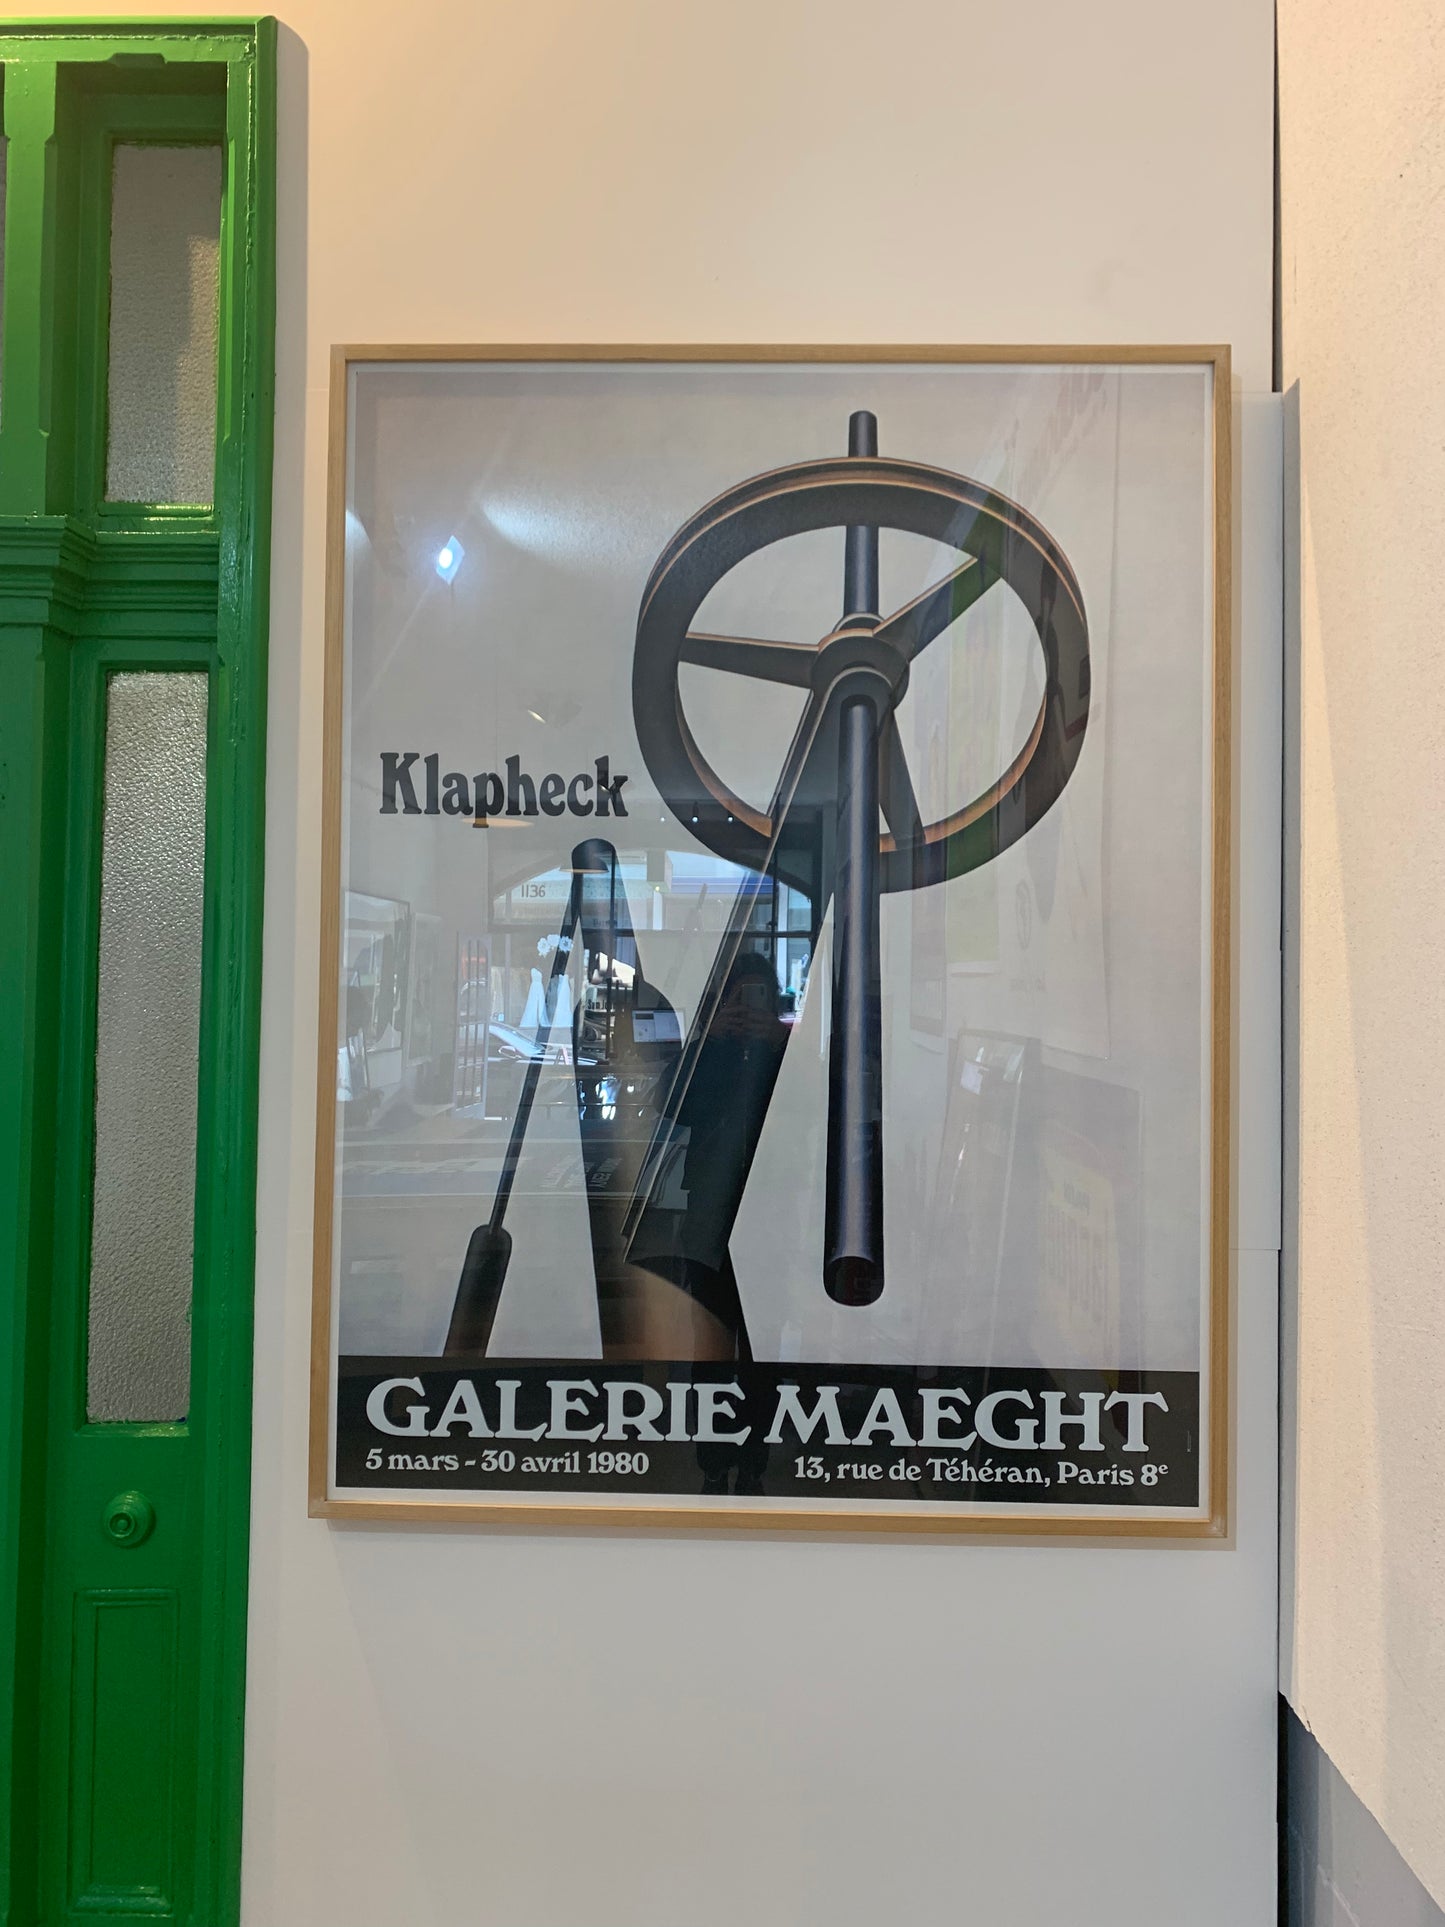 Klapheck, Galerie Maeght